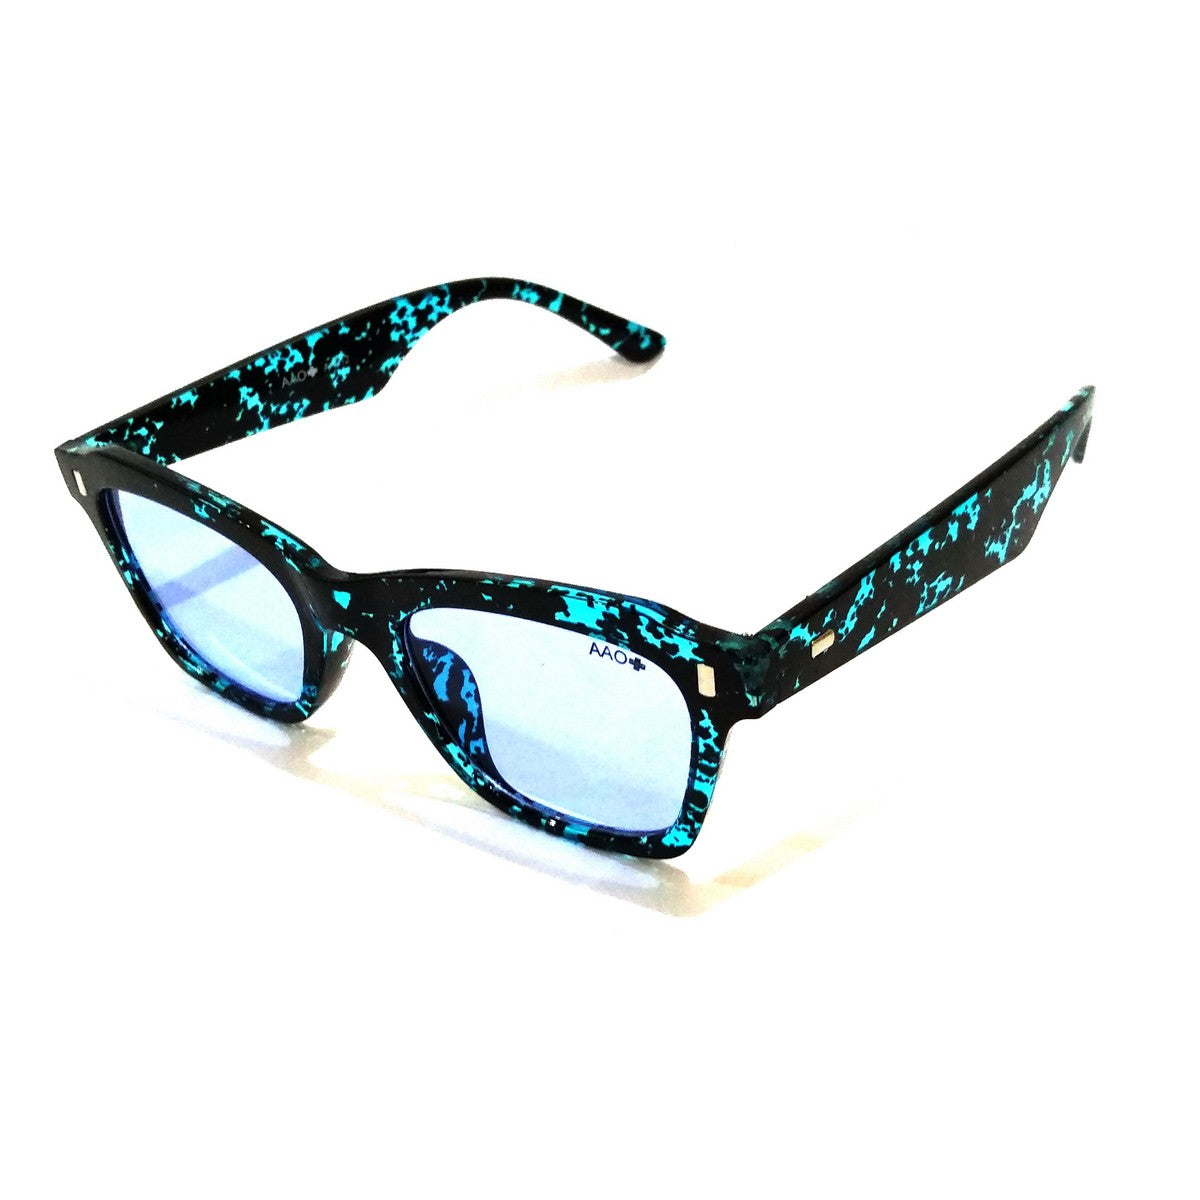 Premium Blue Sunglasses with Light Blue Gradient Lens